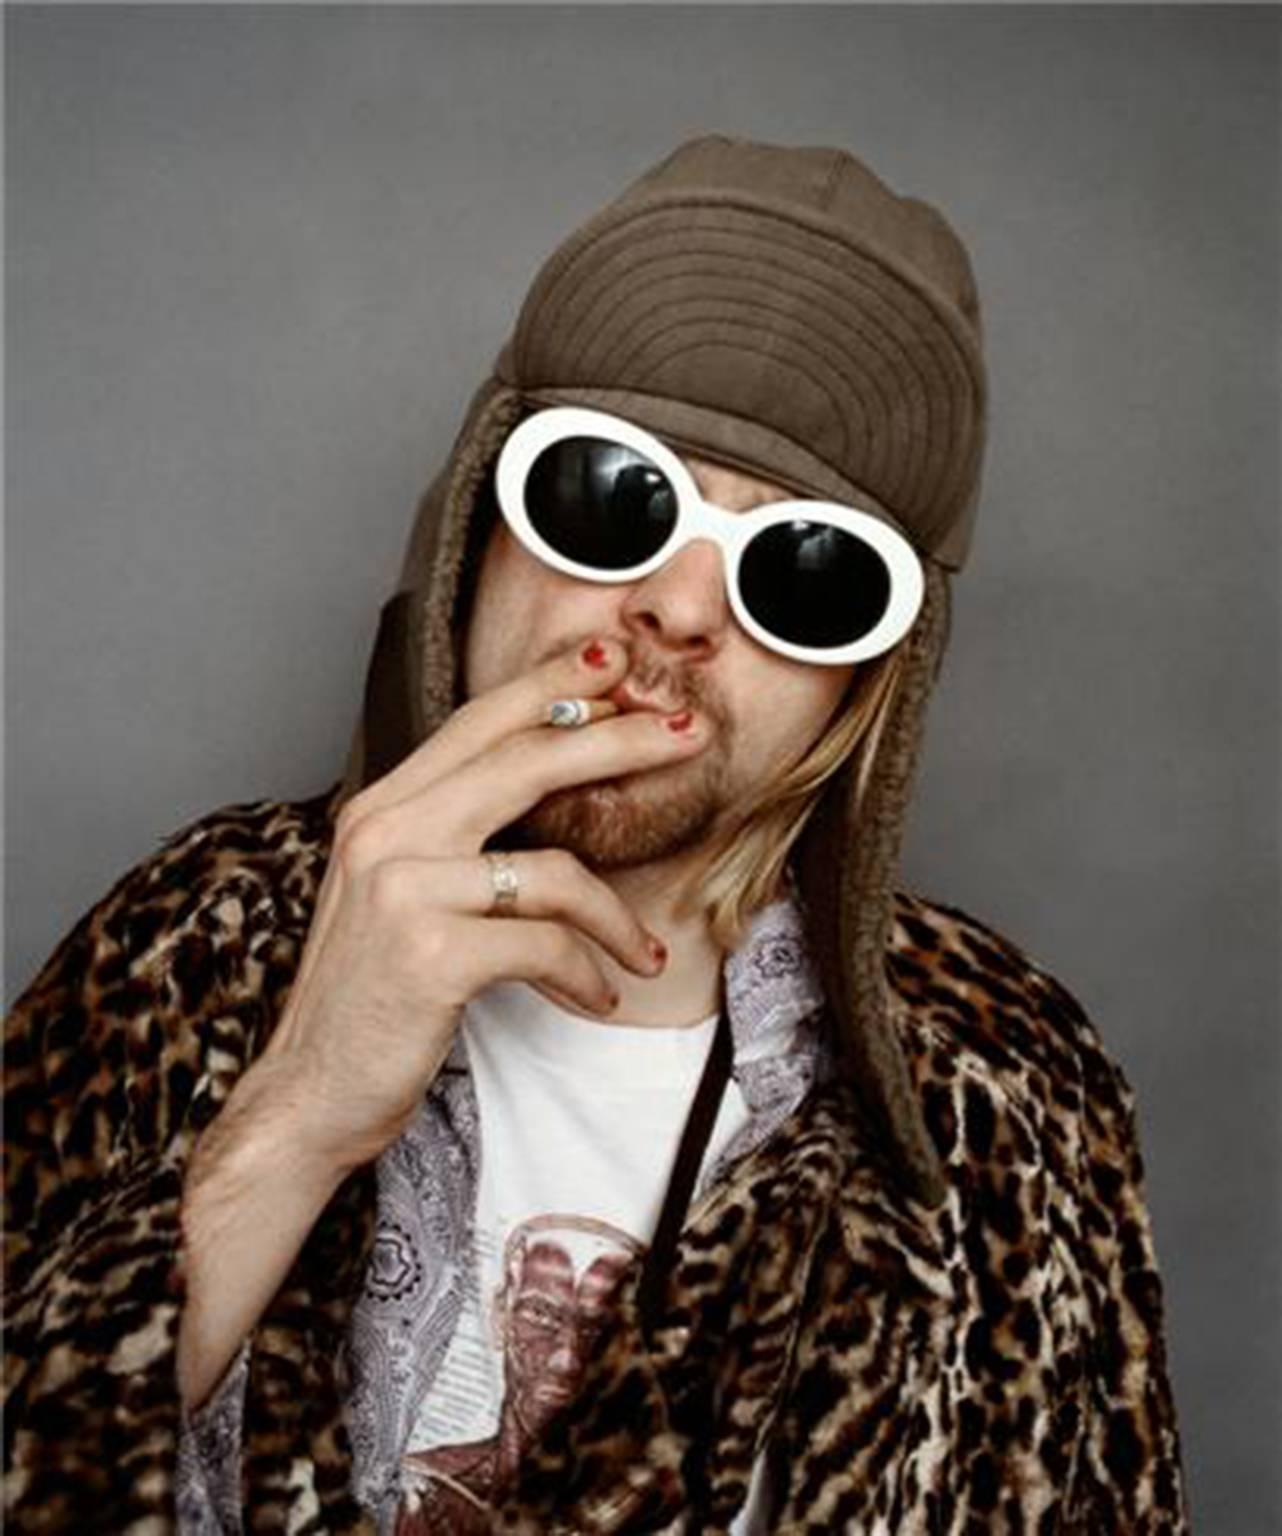 Jesse Frohman Portrait Photograph - Kurt Cobain; "Smoking A"